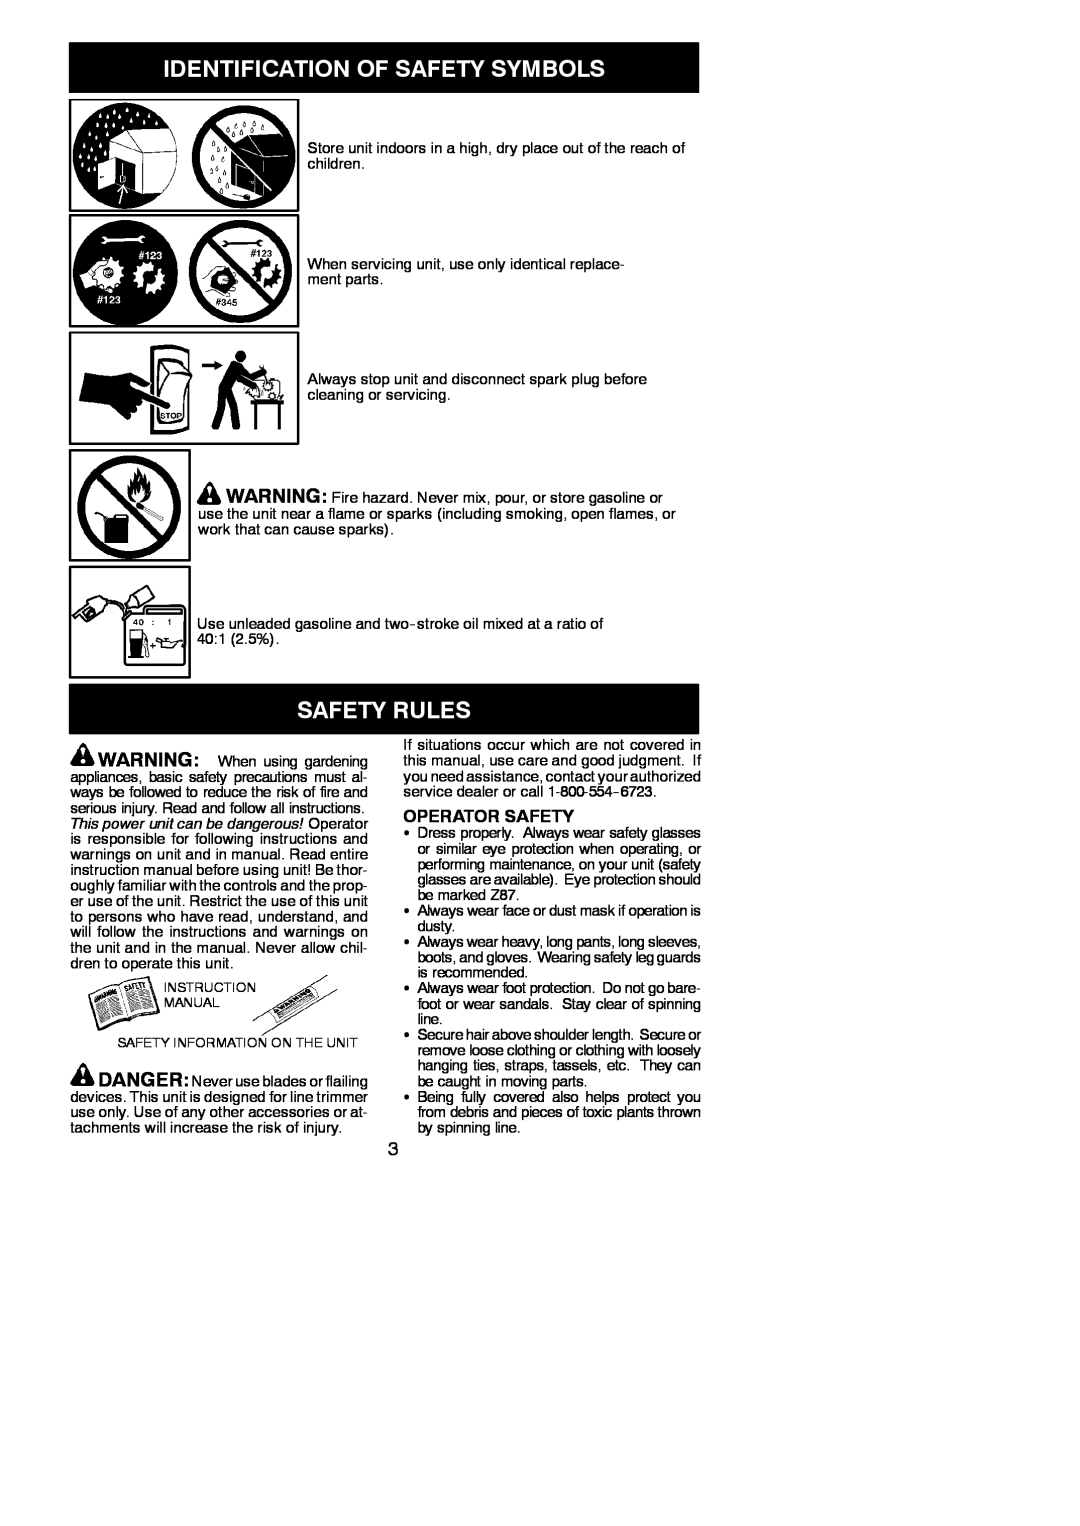 Poulan P2500, 545154717 instruction manual Safety Rules, Identification Of Safety Symbols, Operator Safety 